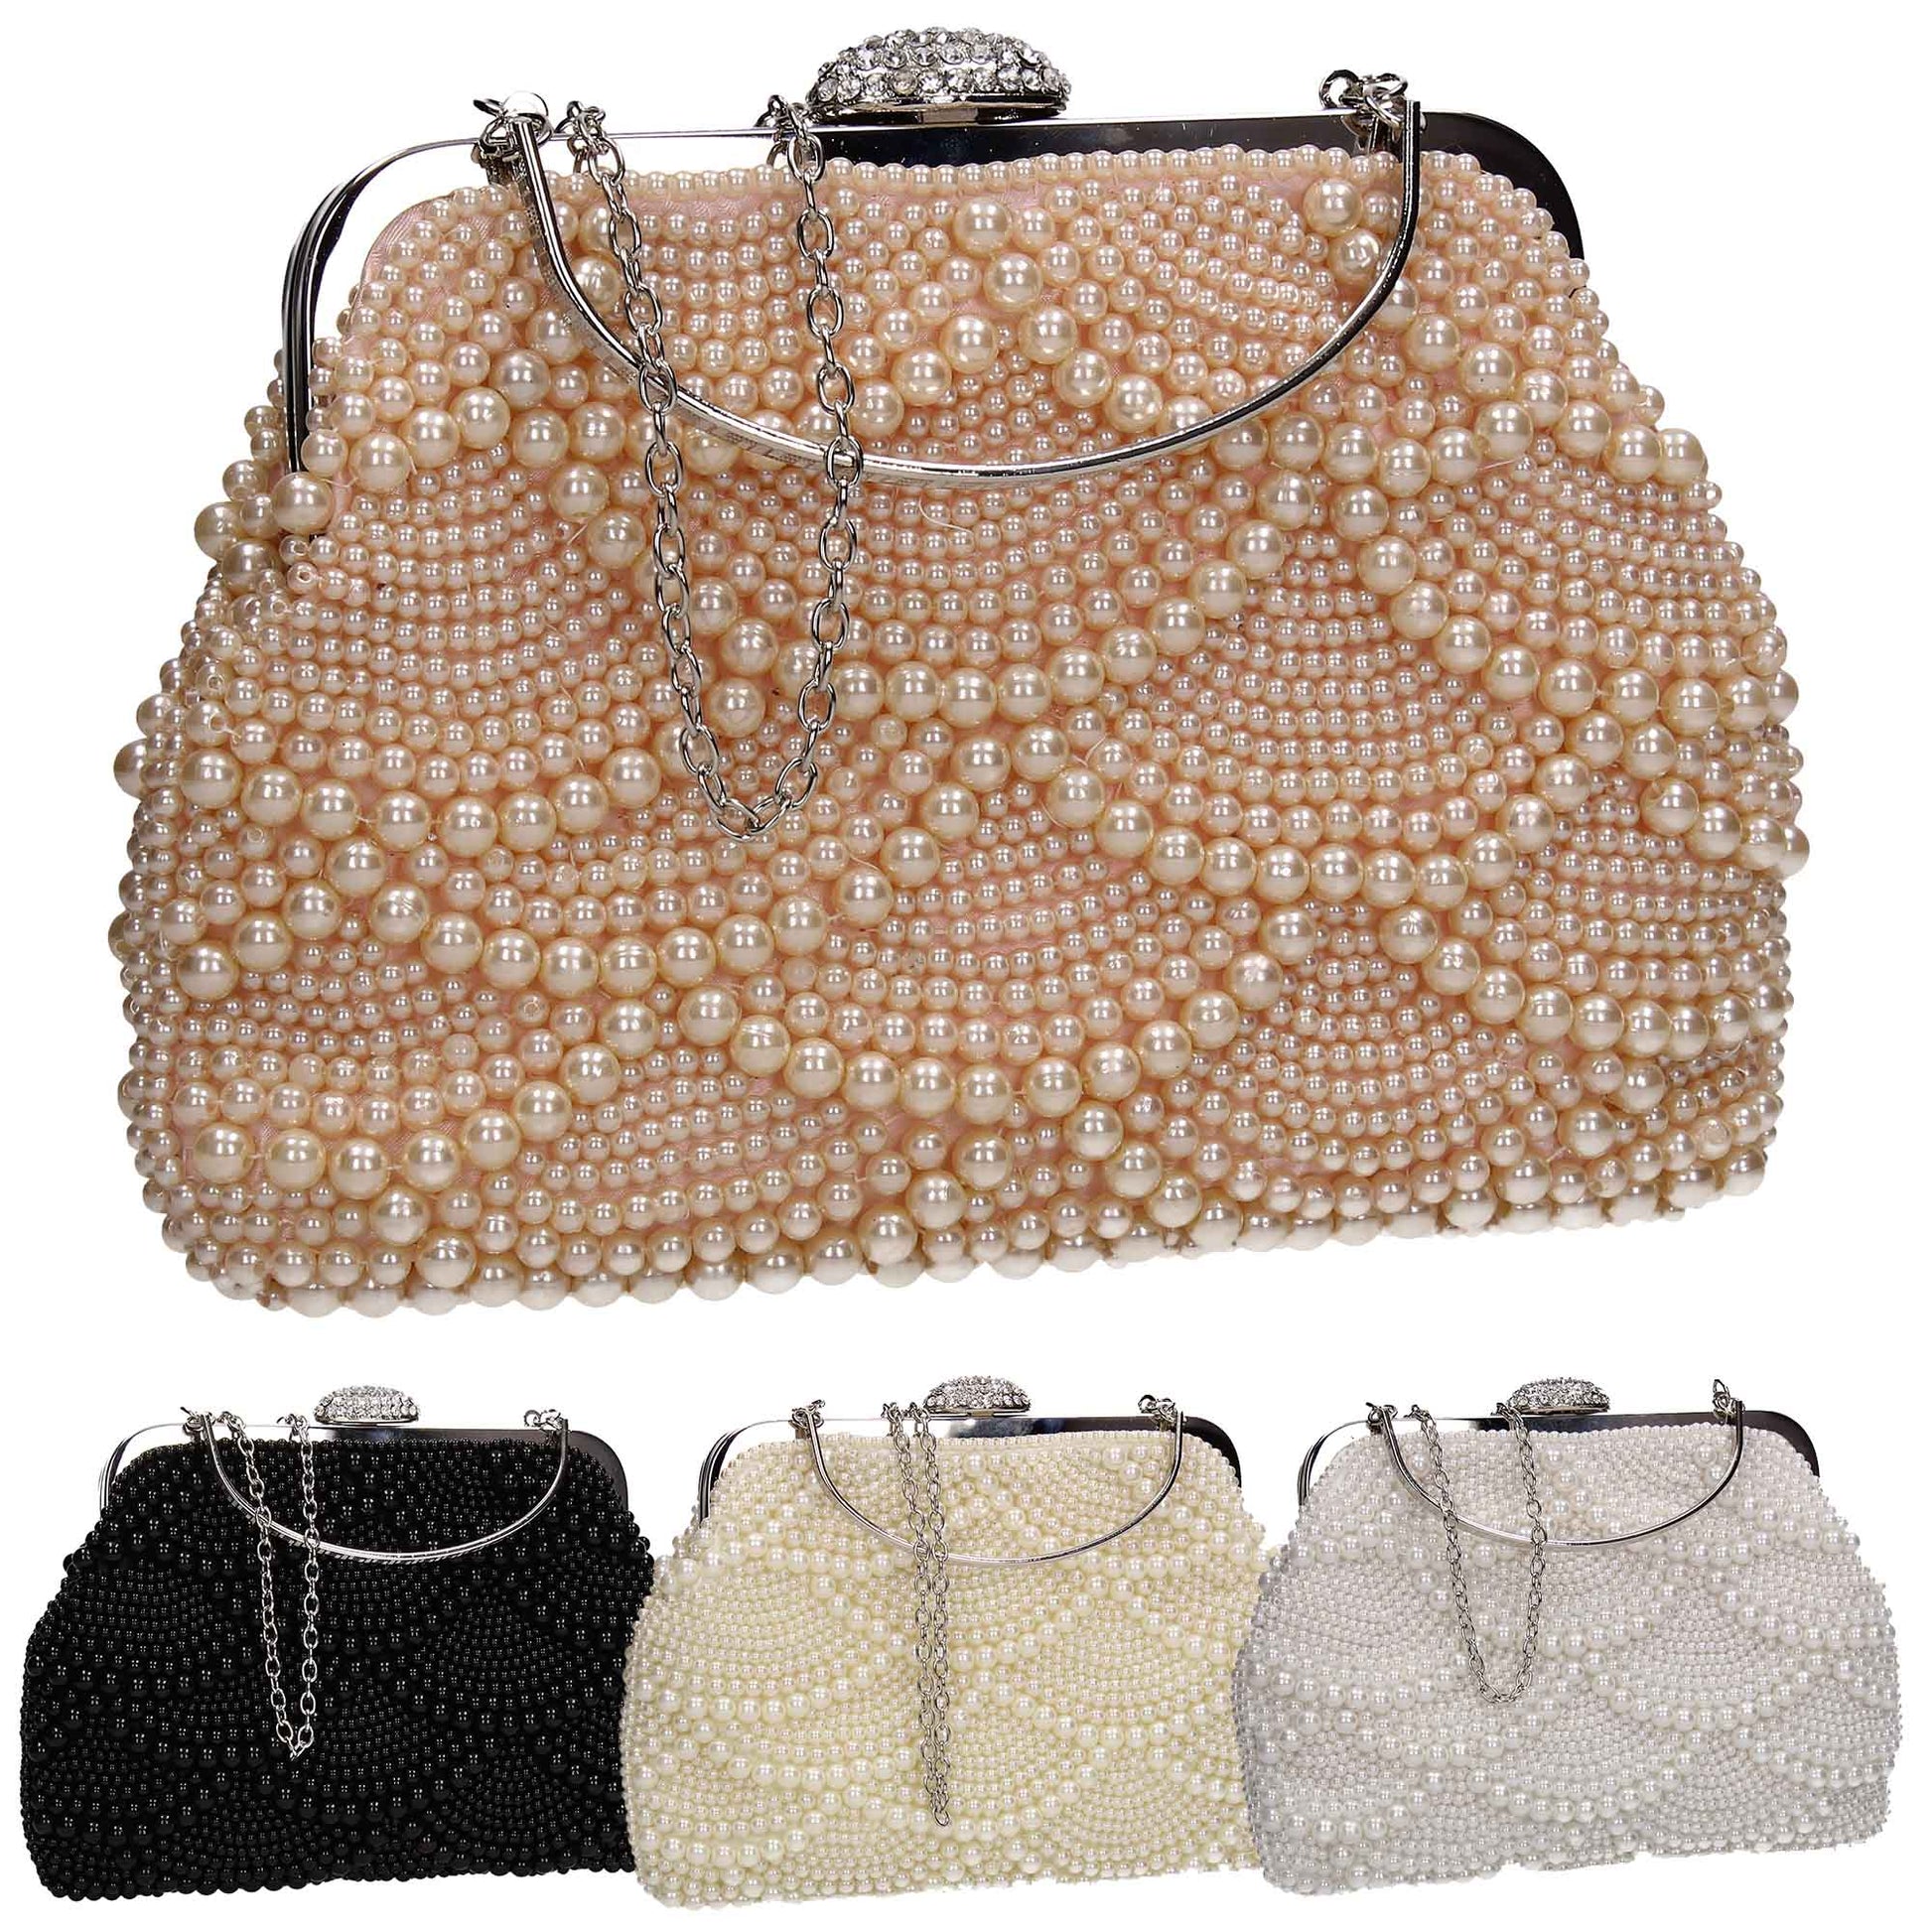 SWANKYSWANS Hailee Faux Pearl Detail Clutch Bag Beige Cute Cheap Clutch Bag For Weddings School and Work